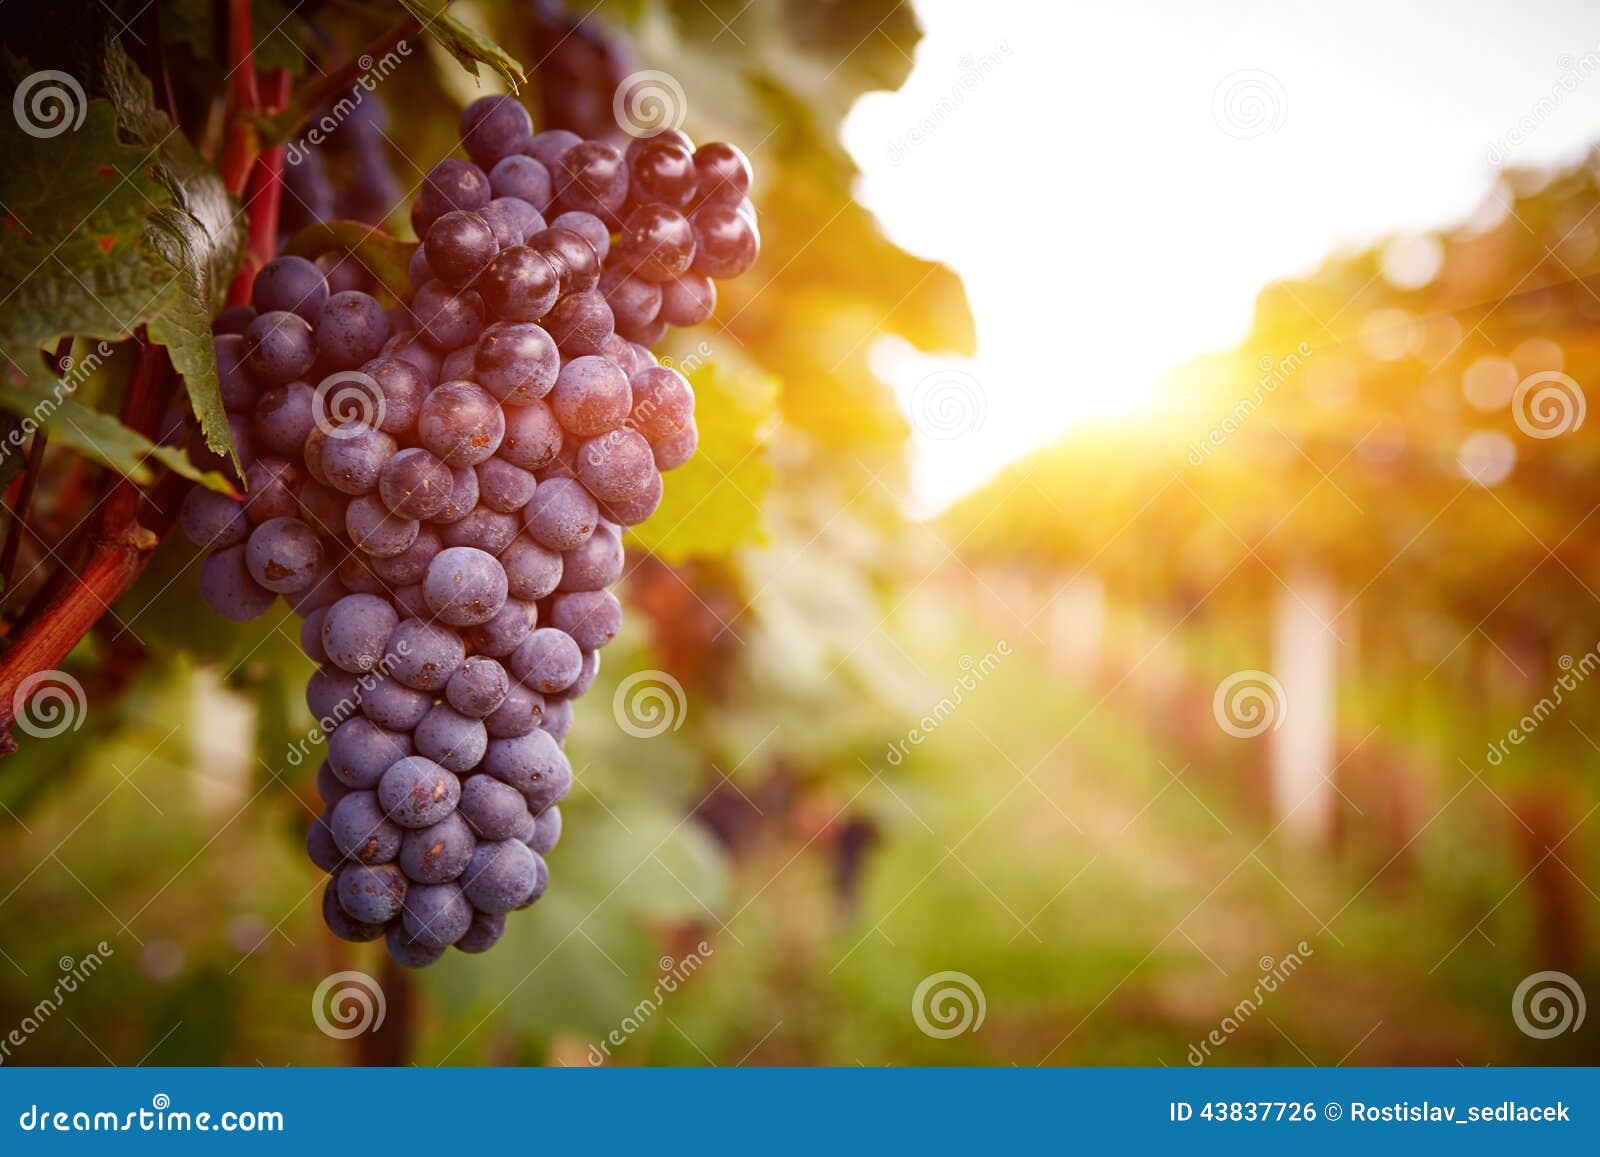 vineyards at sunset in autumn harvest